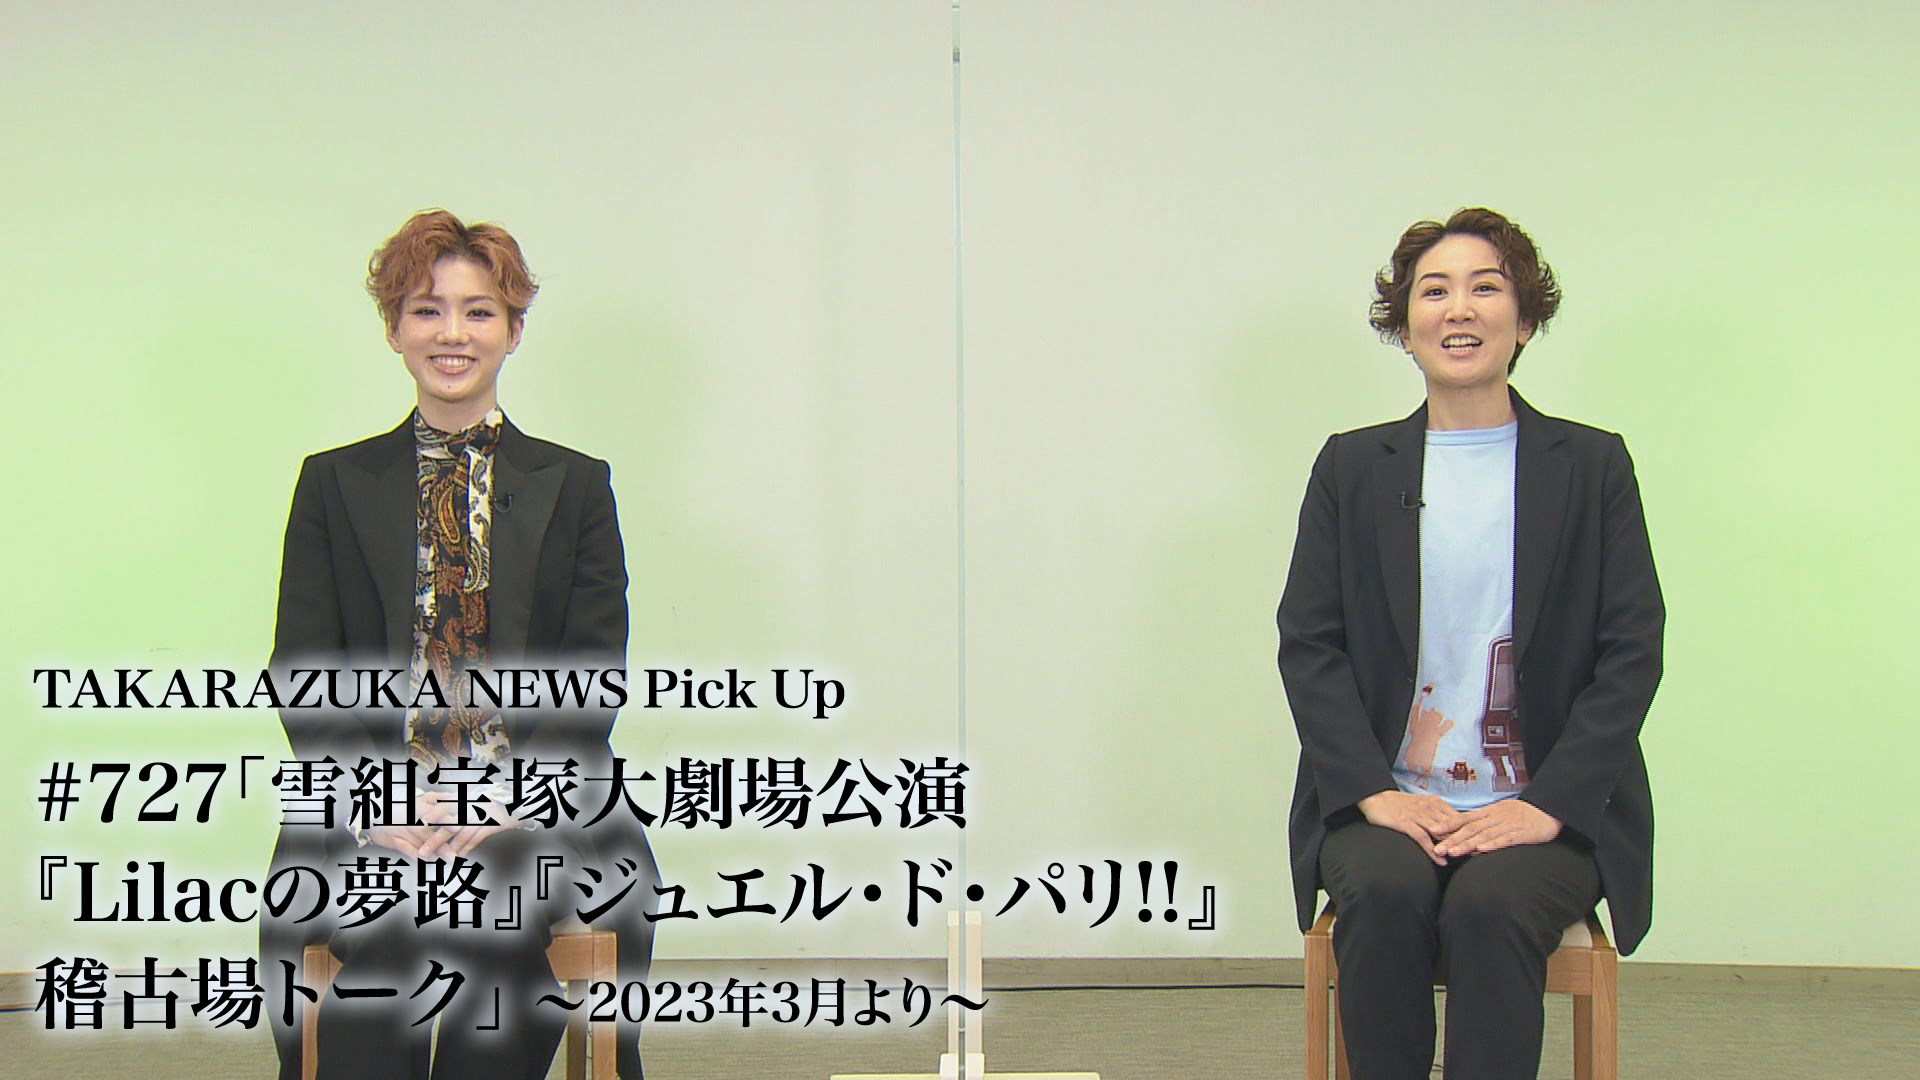 TAKARAZUKA NEWS Pick Up #727「雪組宝塚大劇場公演『Lilacの夢路 ...